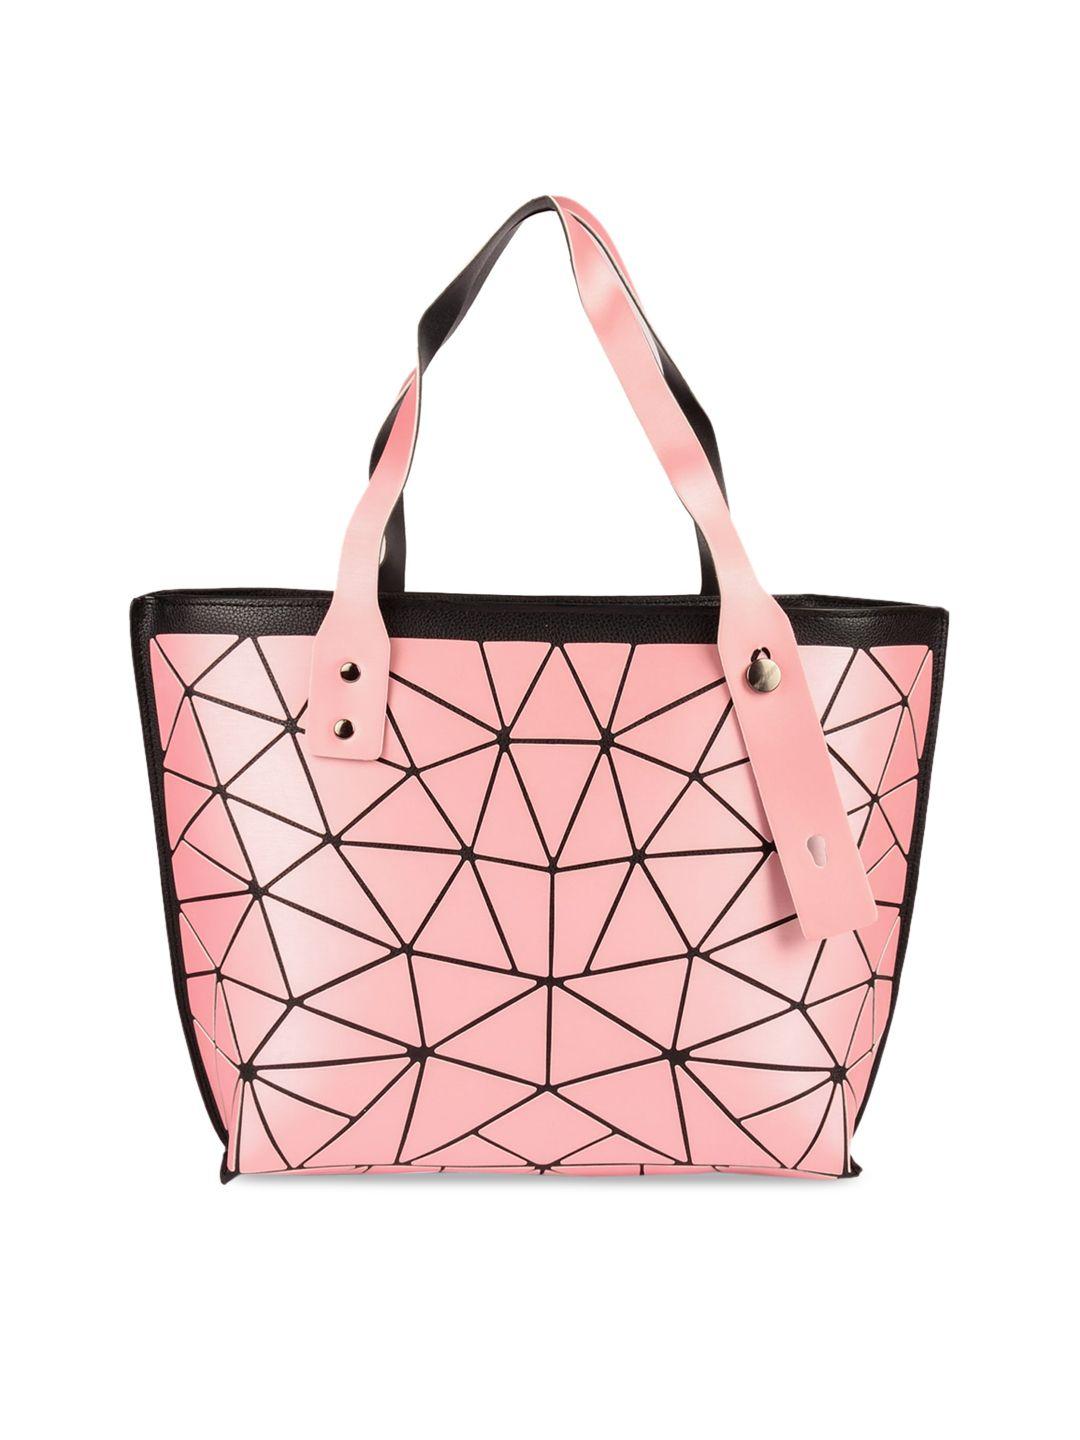 baomi geometric tote range rose gold color soft one size handbag